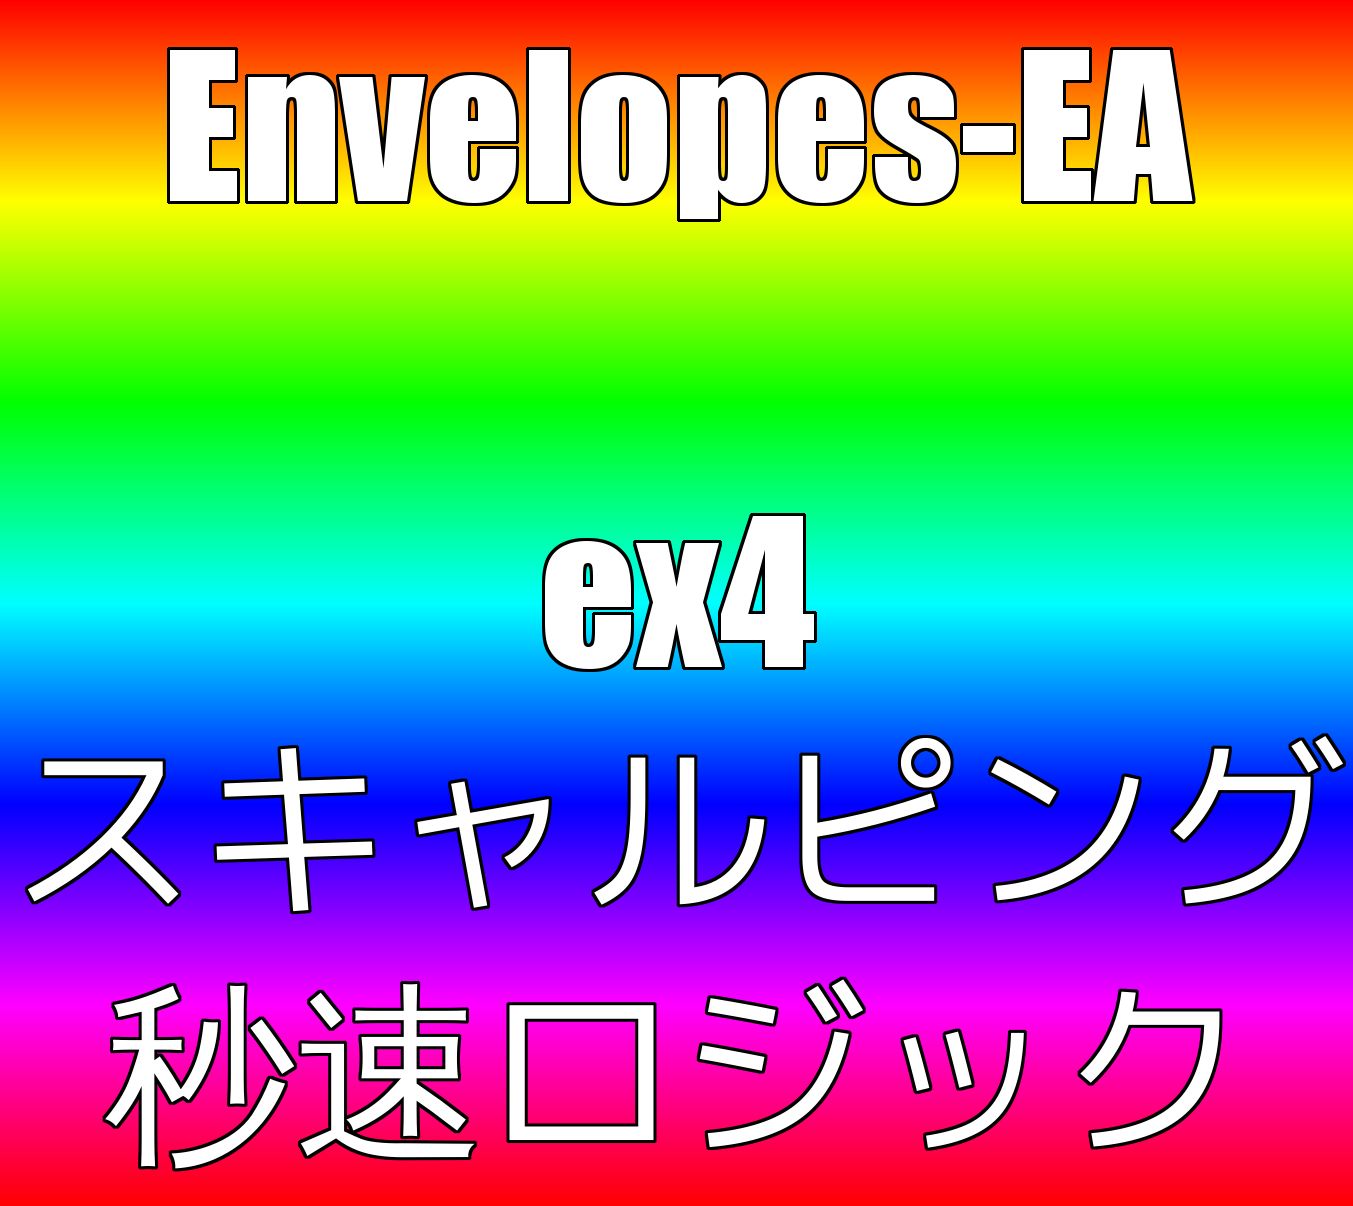 ENVELOPES-EA ซื้อขายอัตโนมัติ